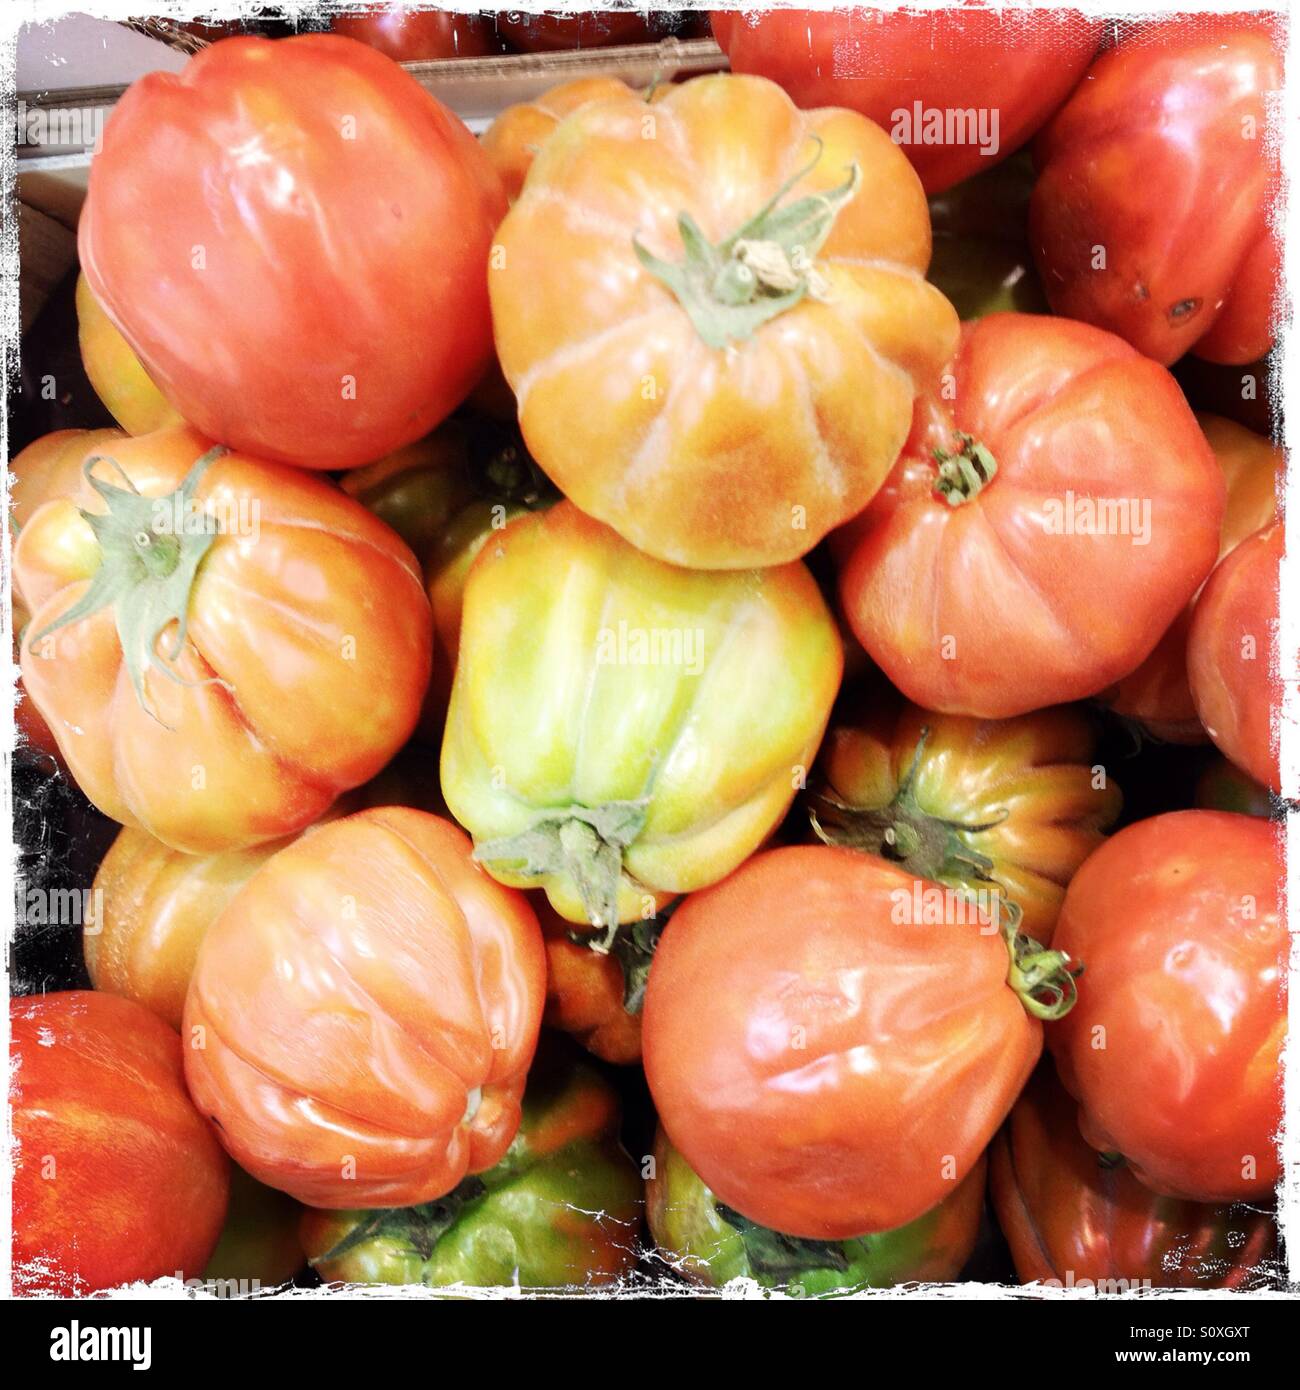 Box of tomatoes Stock Photo